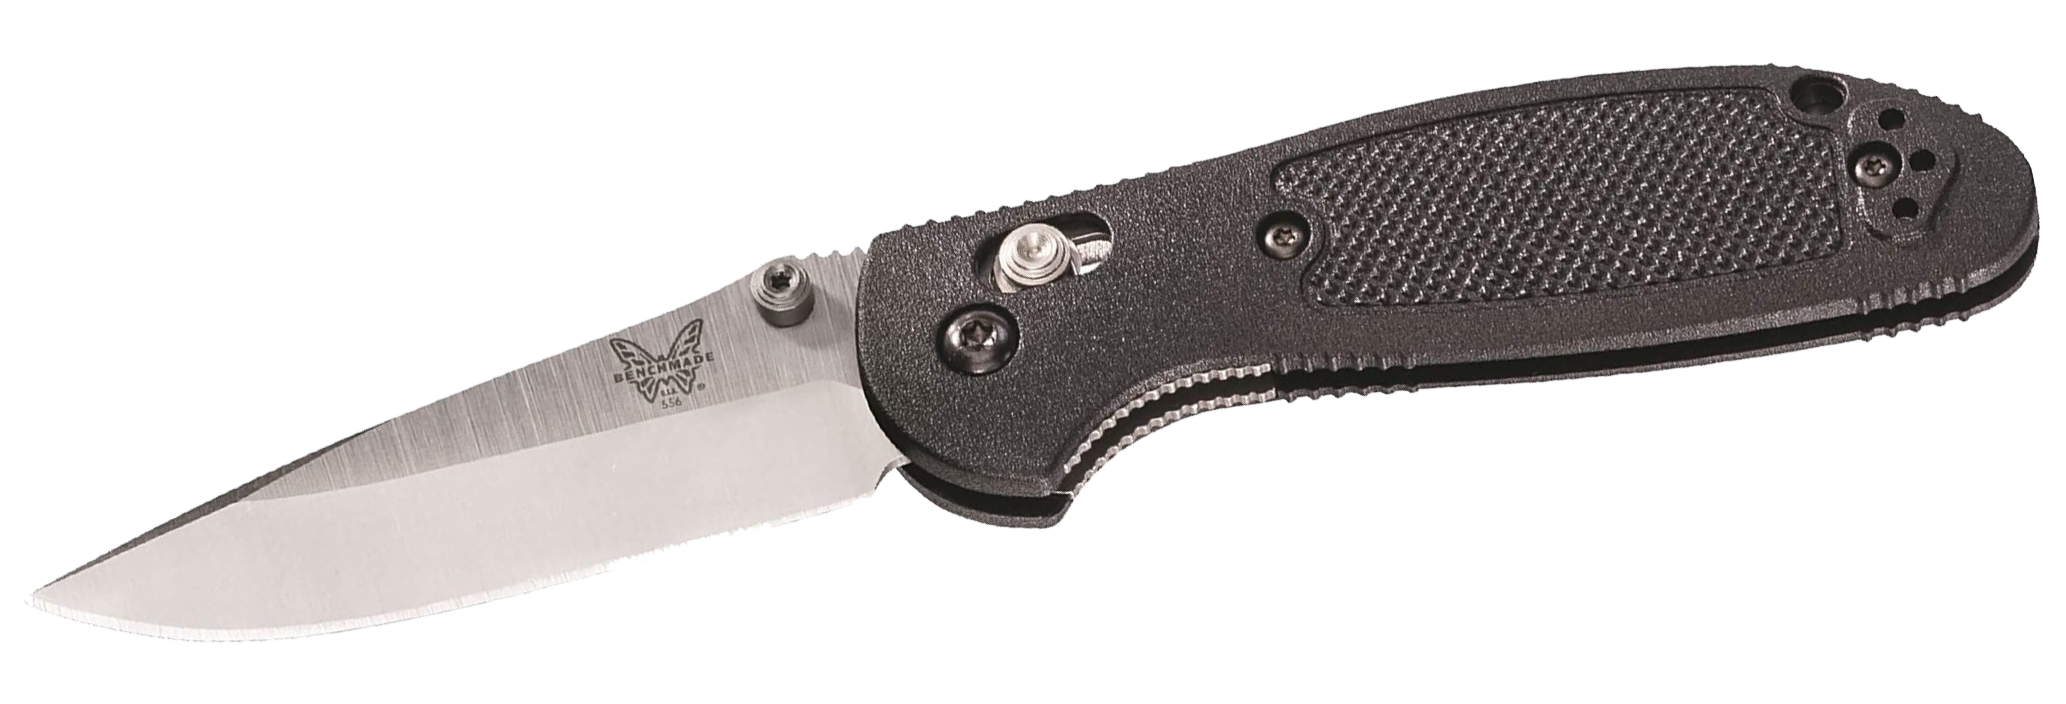 Benchmade Mini Griptilian model #556-S30V folding pocket knife